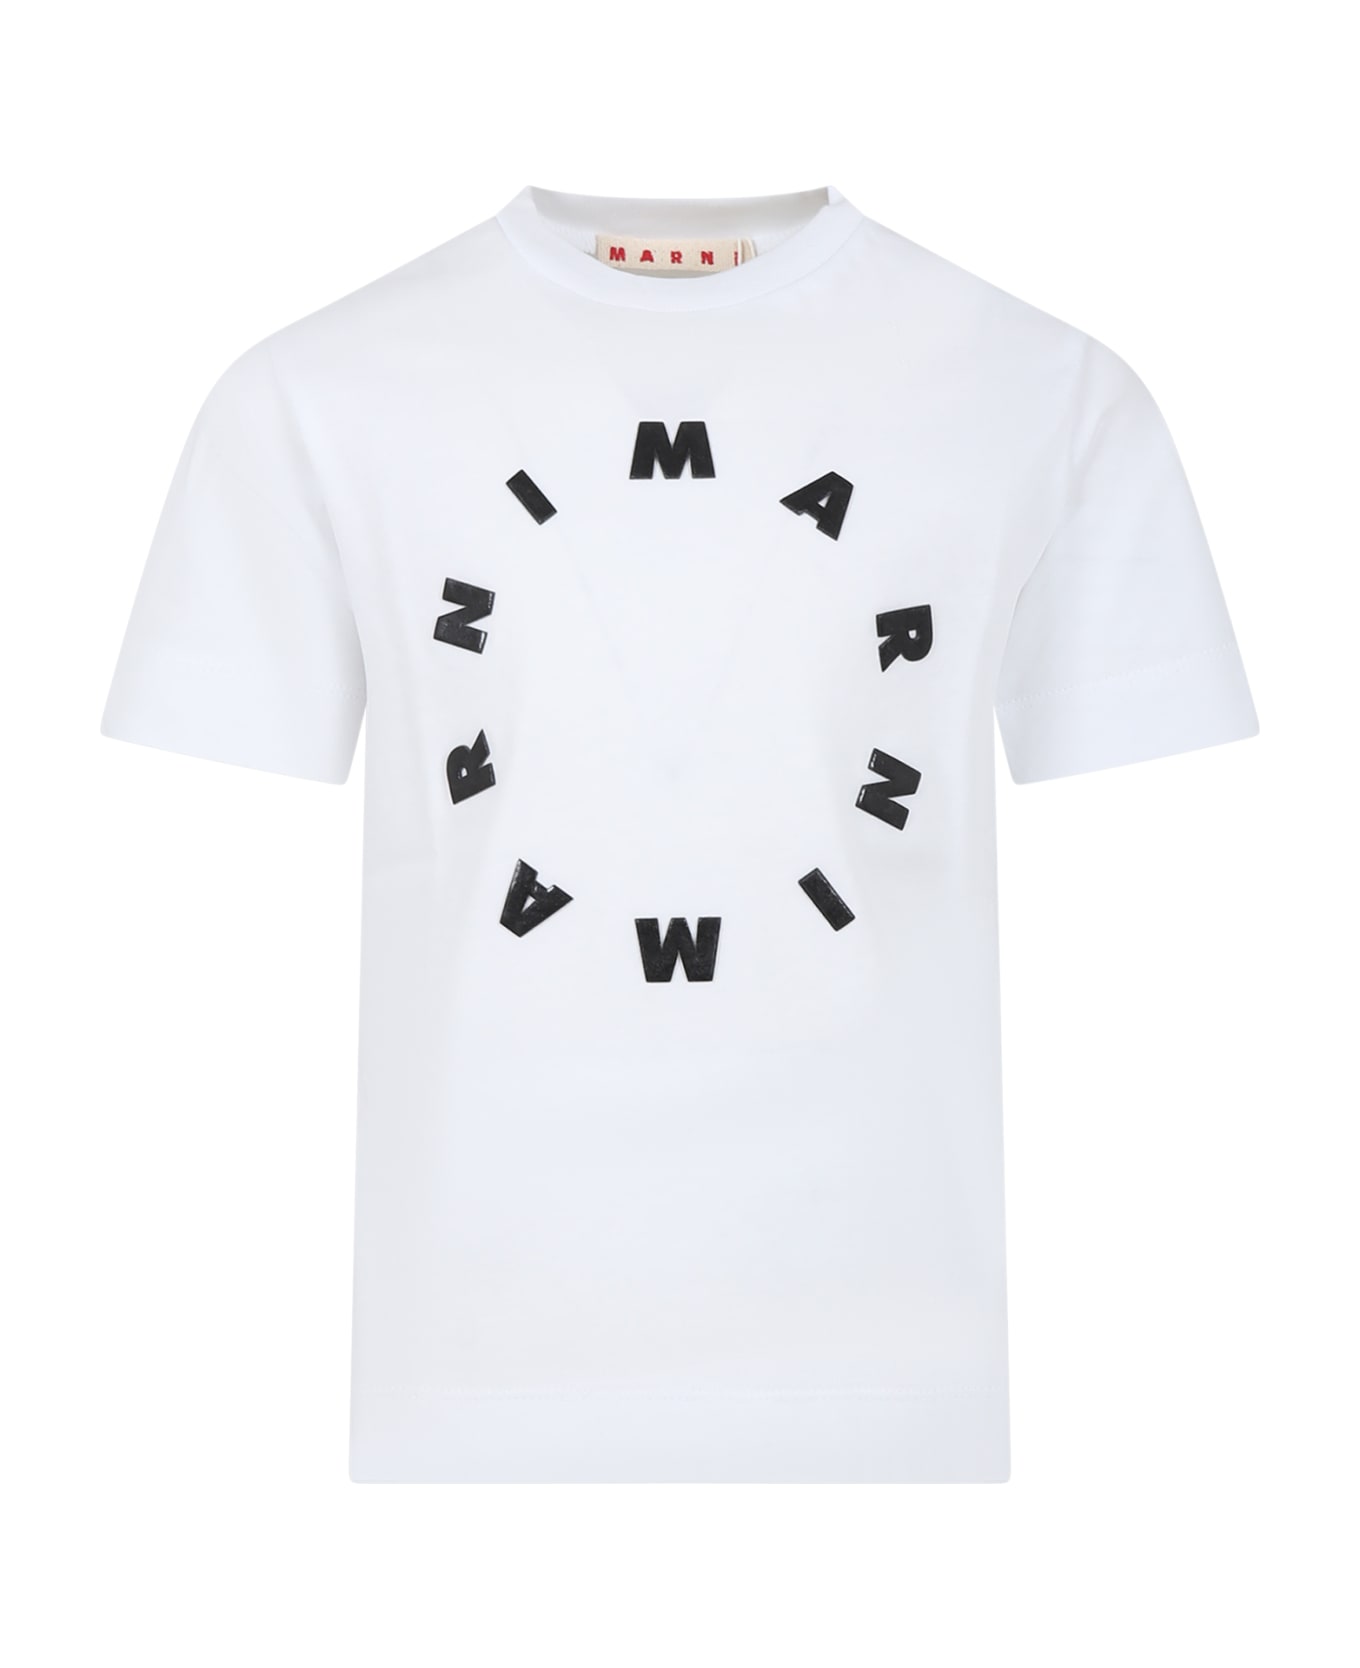 Marni White T-shirt For Kids With Logo - White